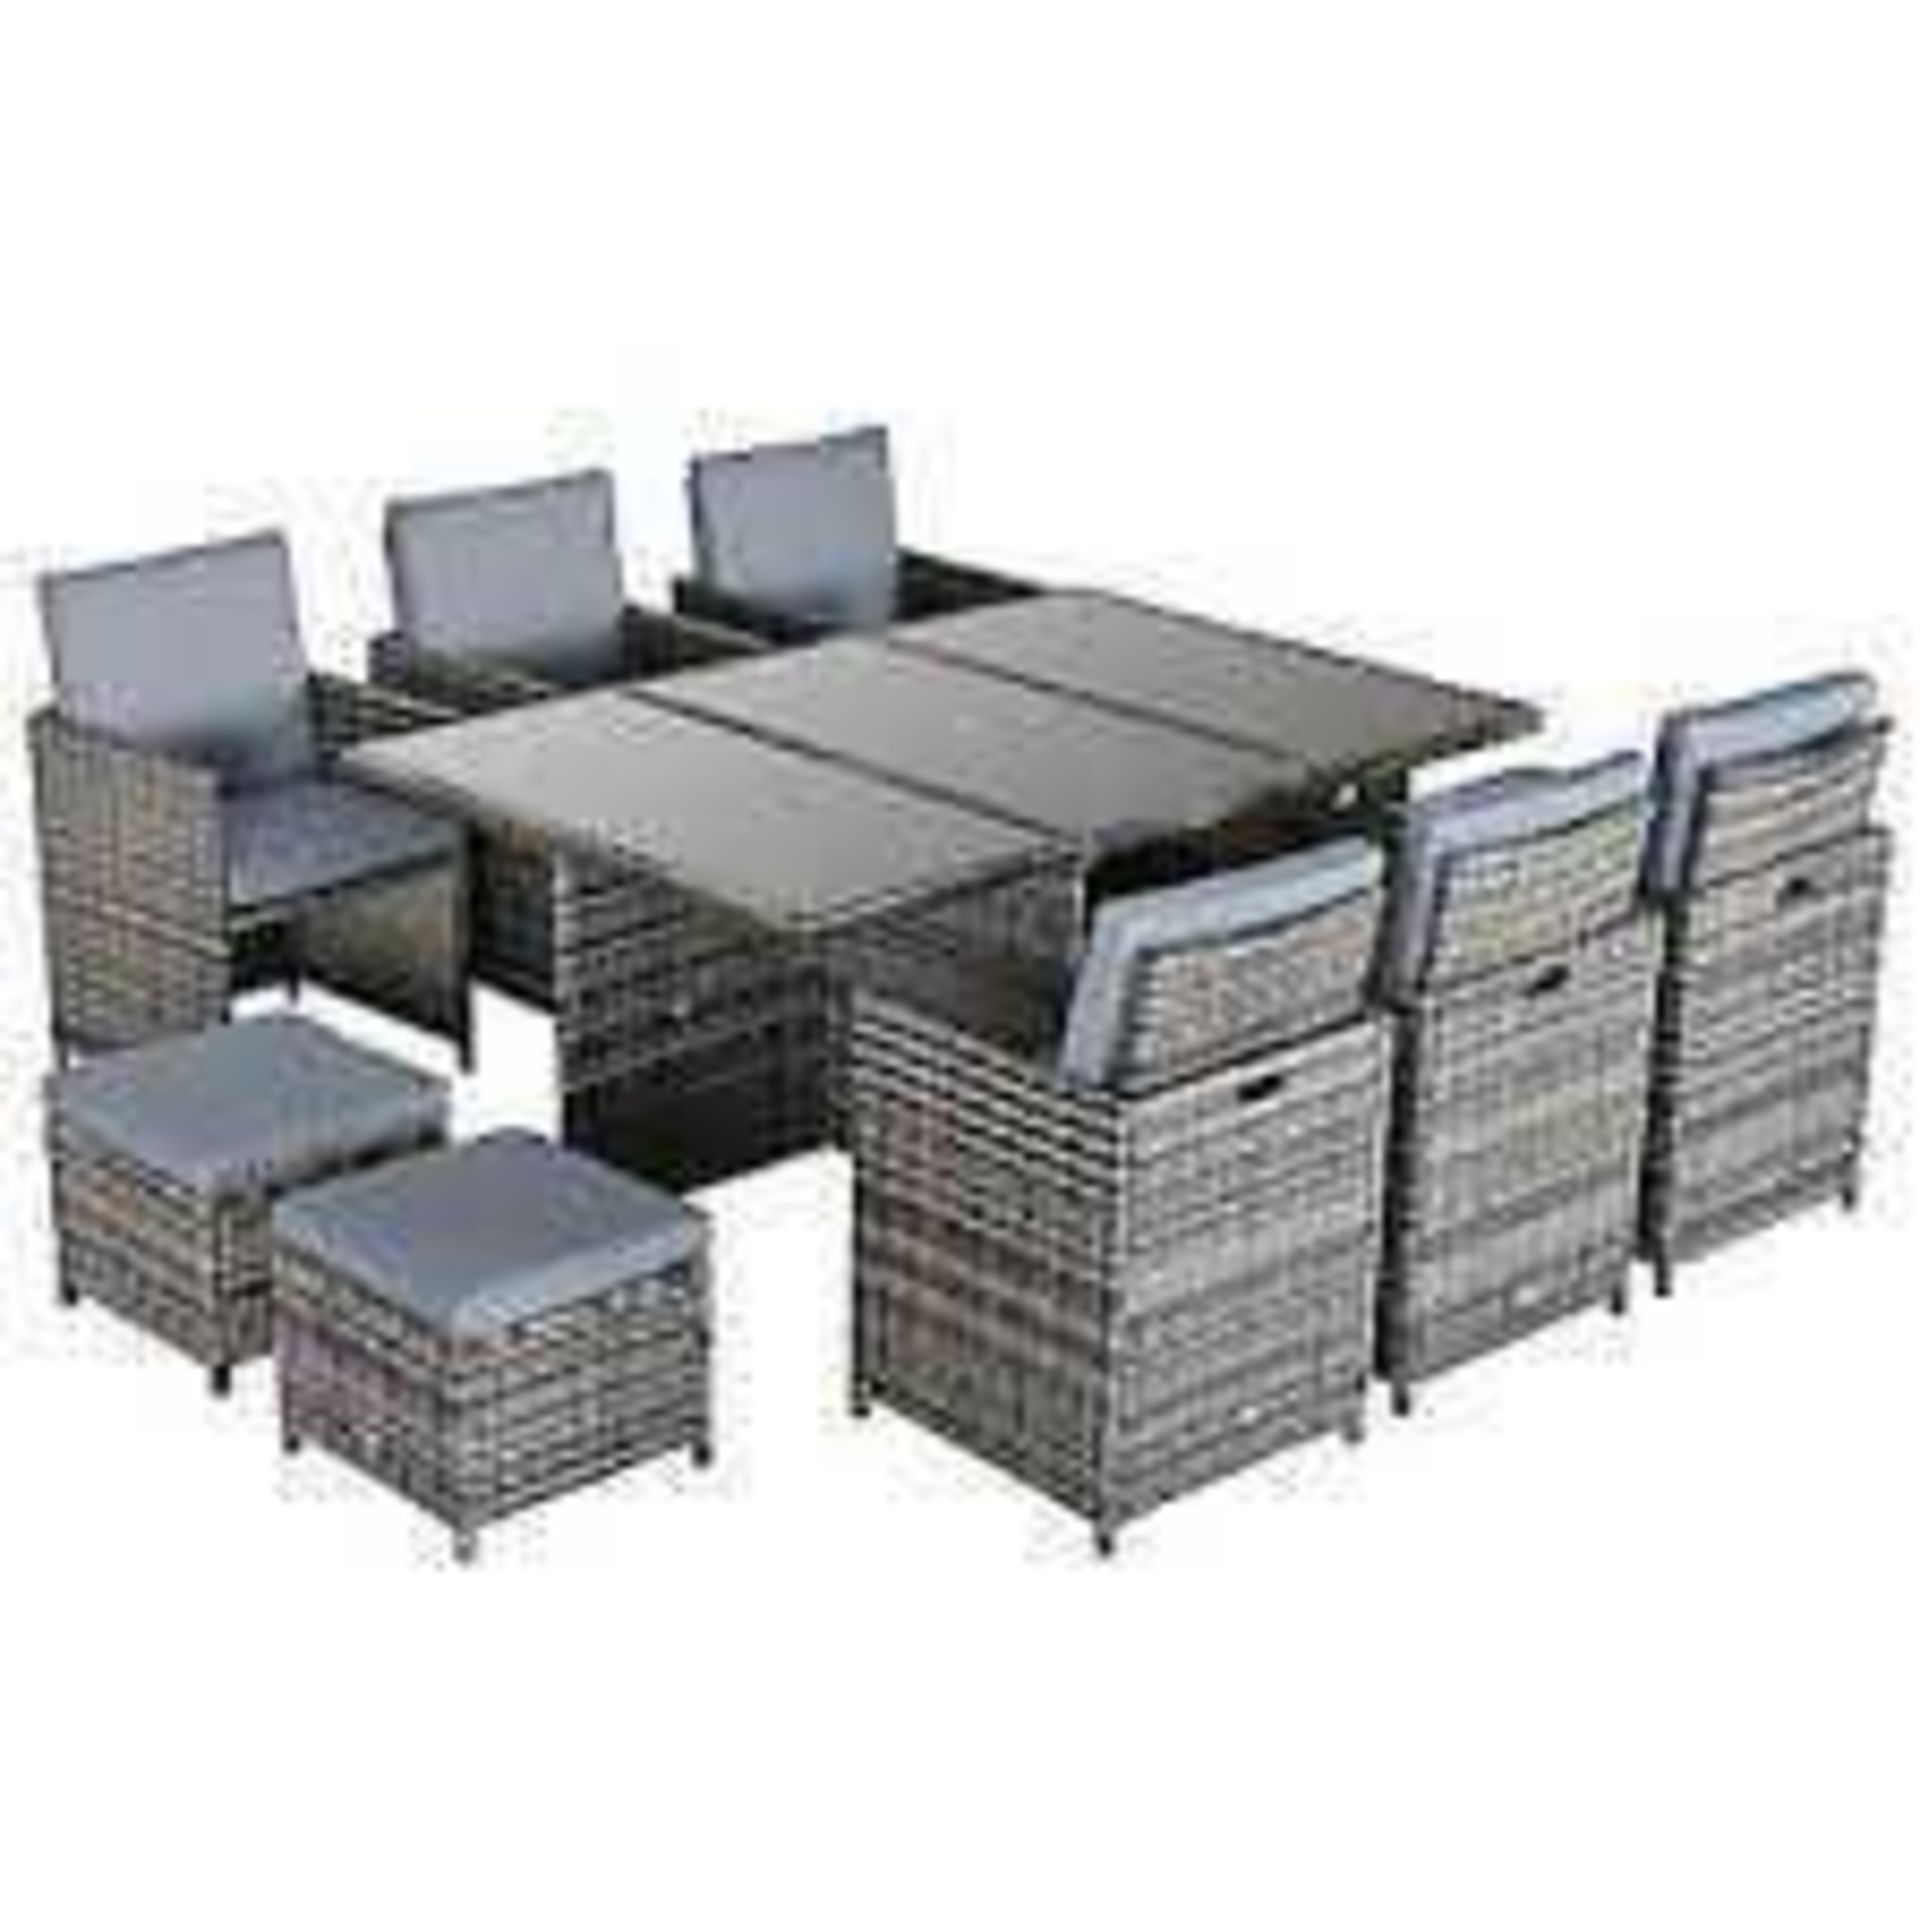 RRP £850 Lot To Contain 4X Boxes Containing Outsunny Nantan 7 Seater Rattan Sofa Set (Aj) - Image 2 of 4